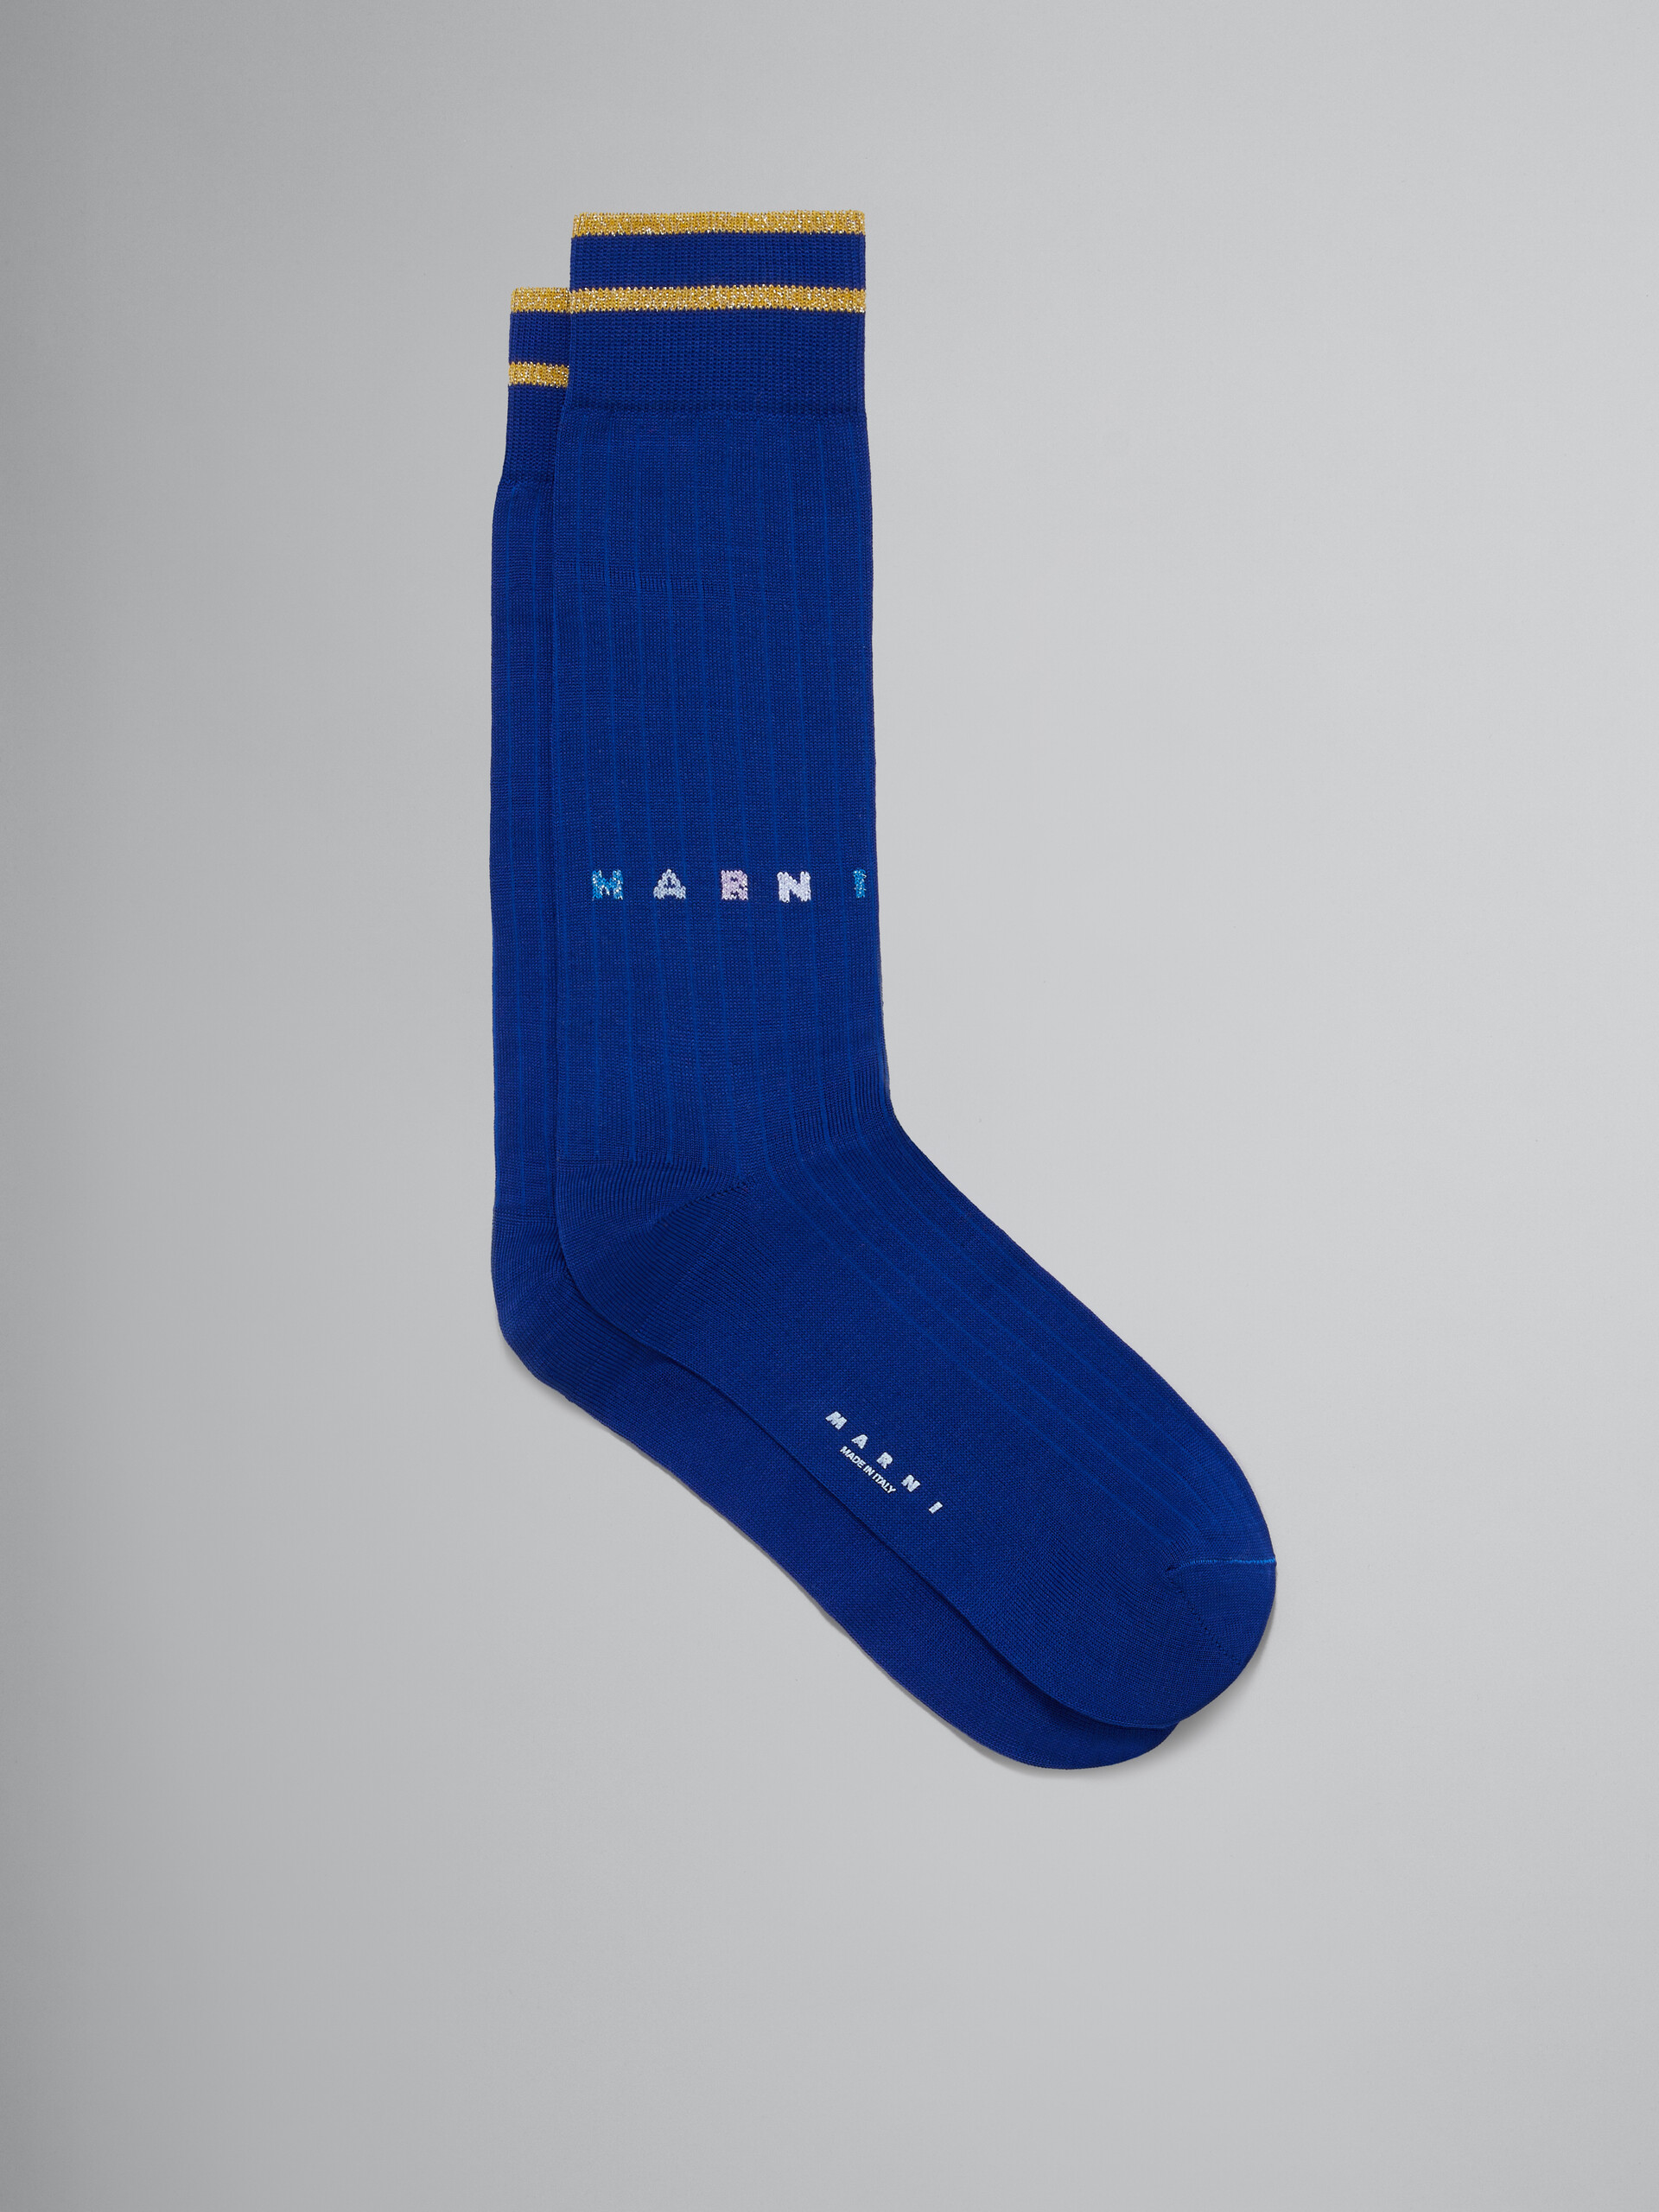 Blue cotton socks with Lurex logo - Socks - Image 1